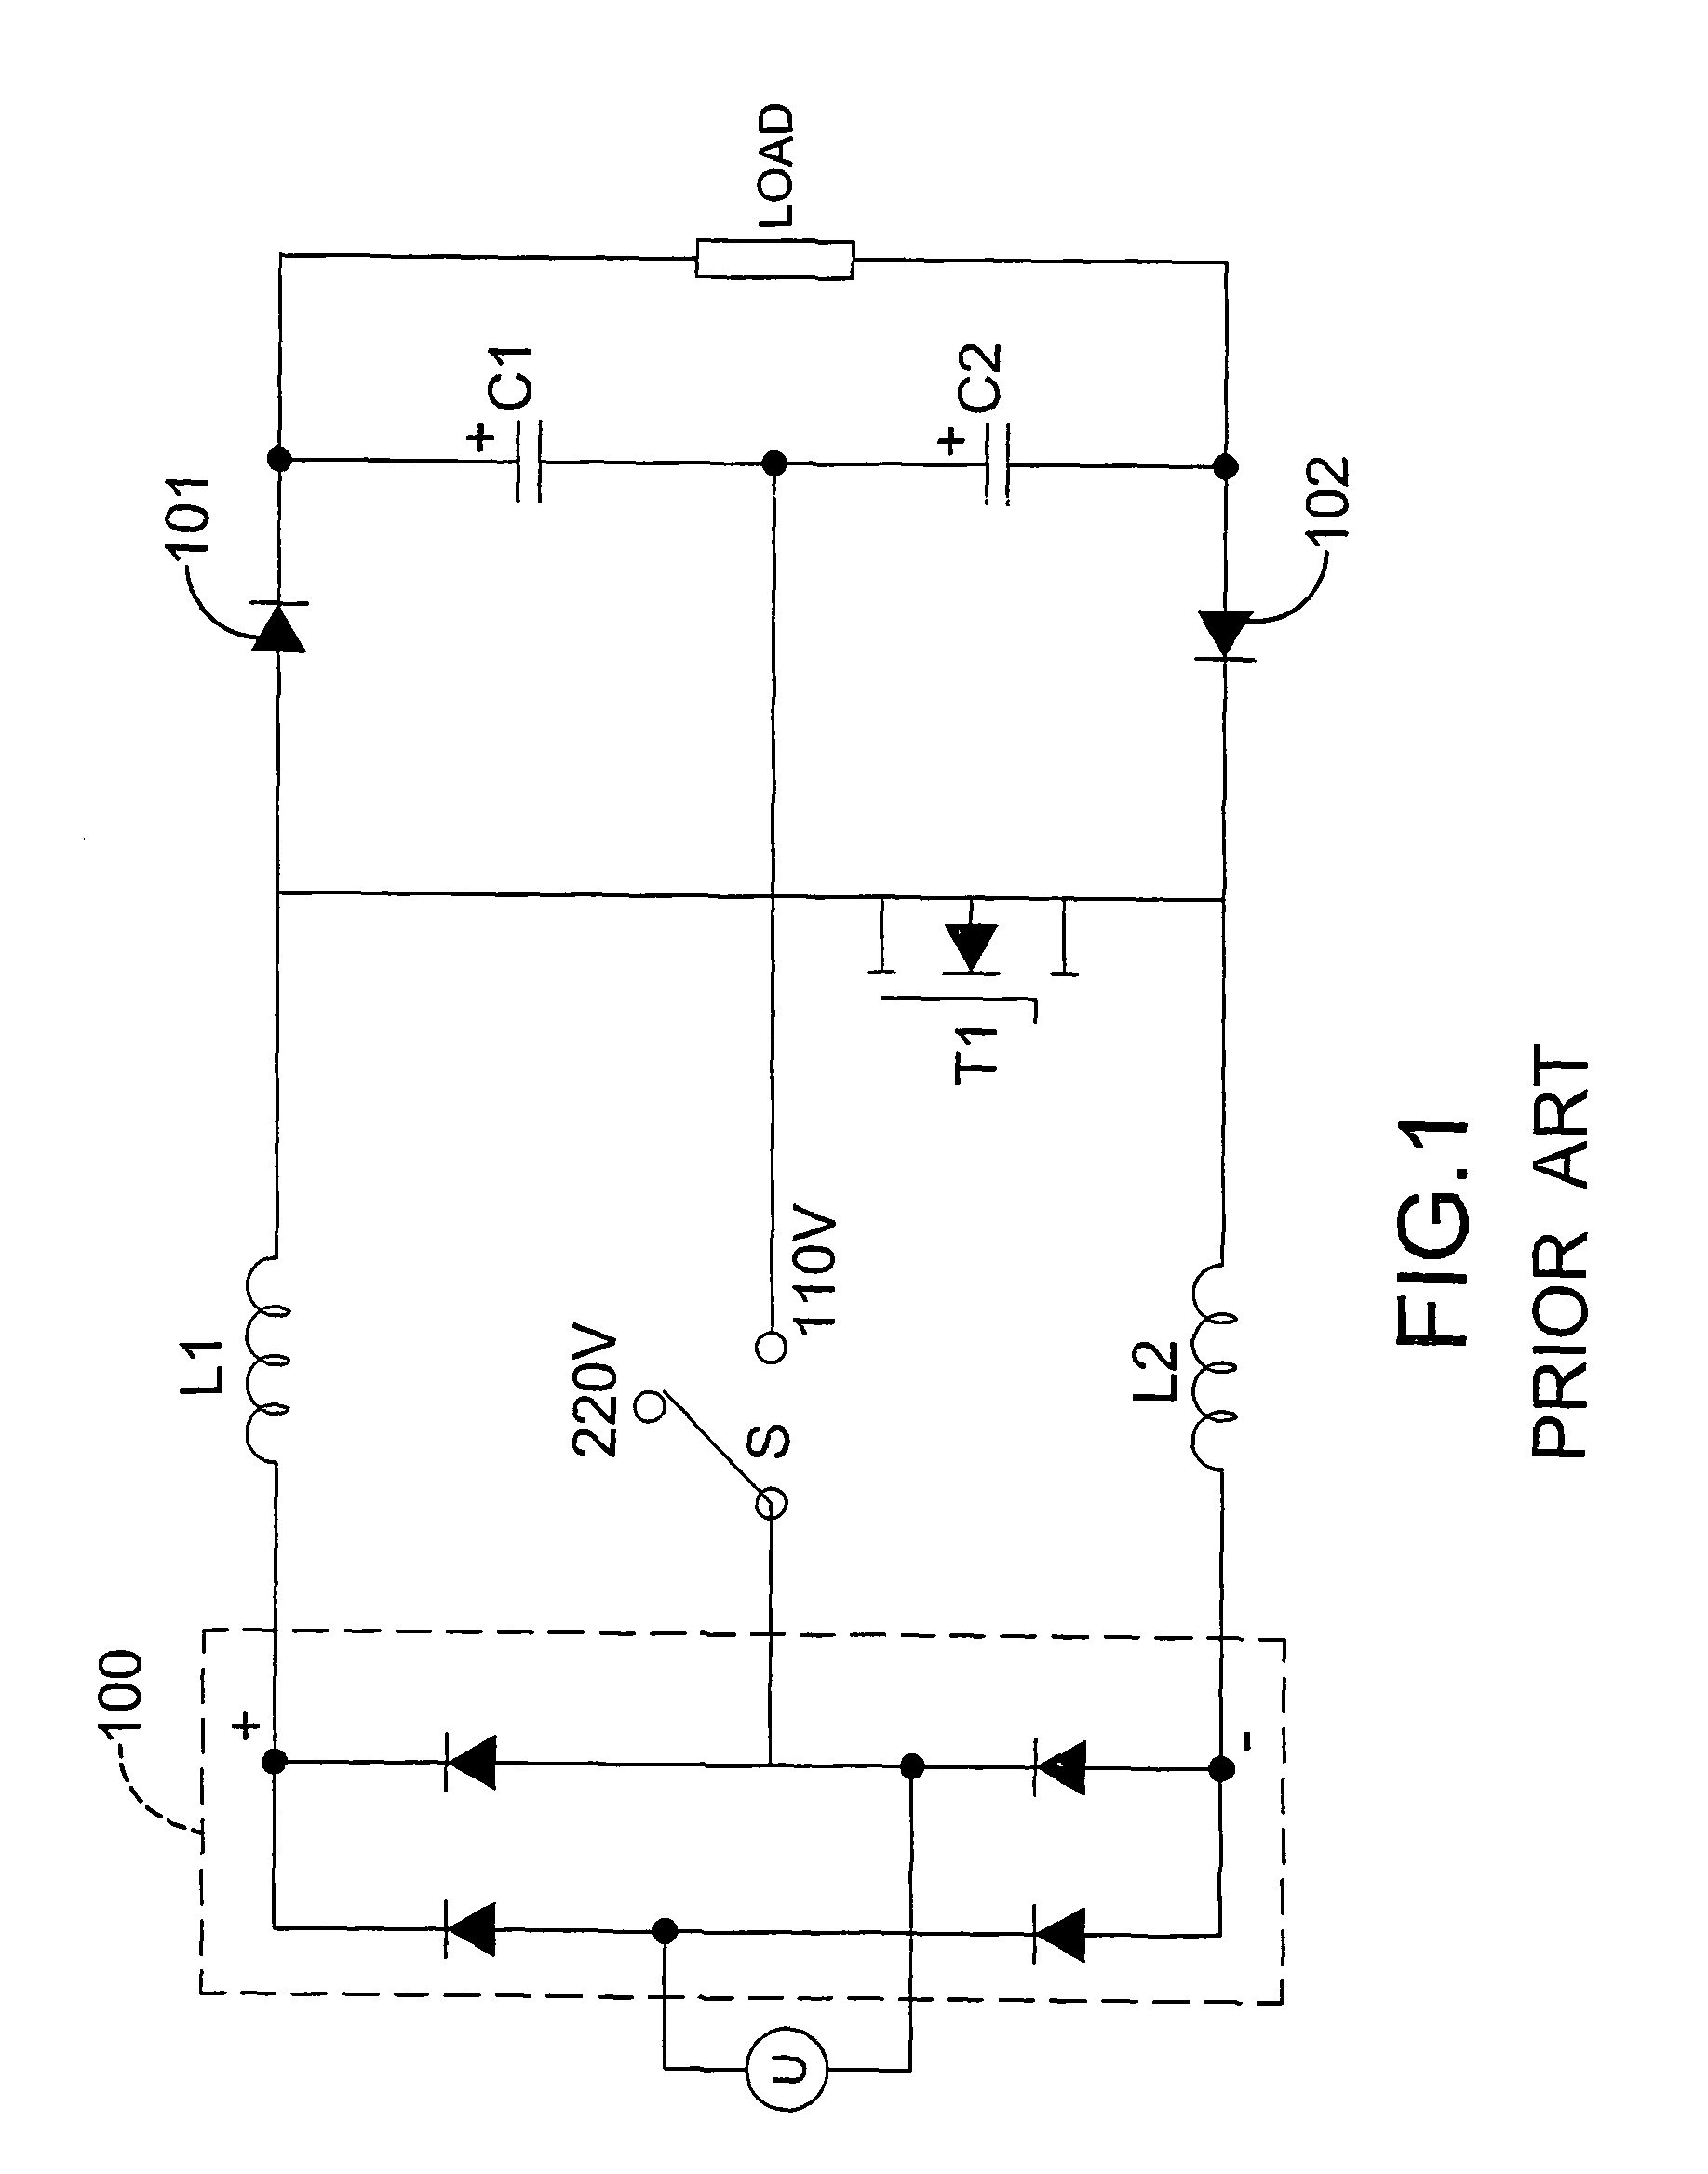 Bi-directional DC to DC power converter having a neutral terminal